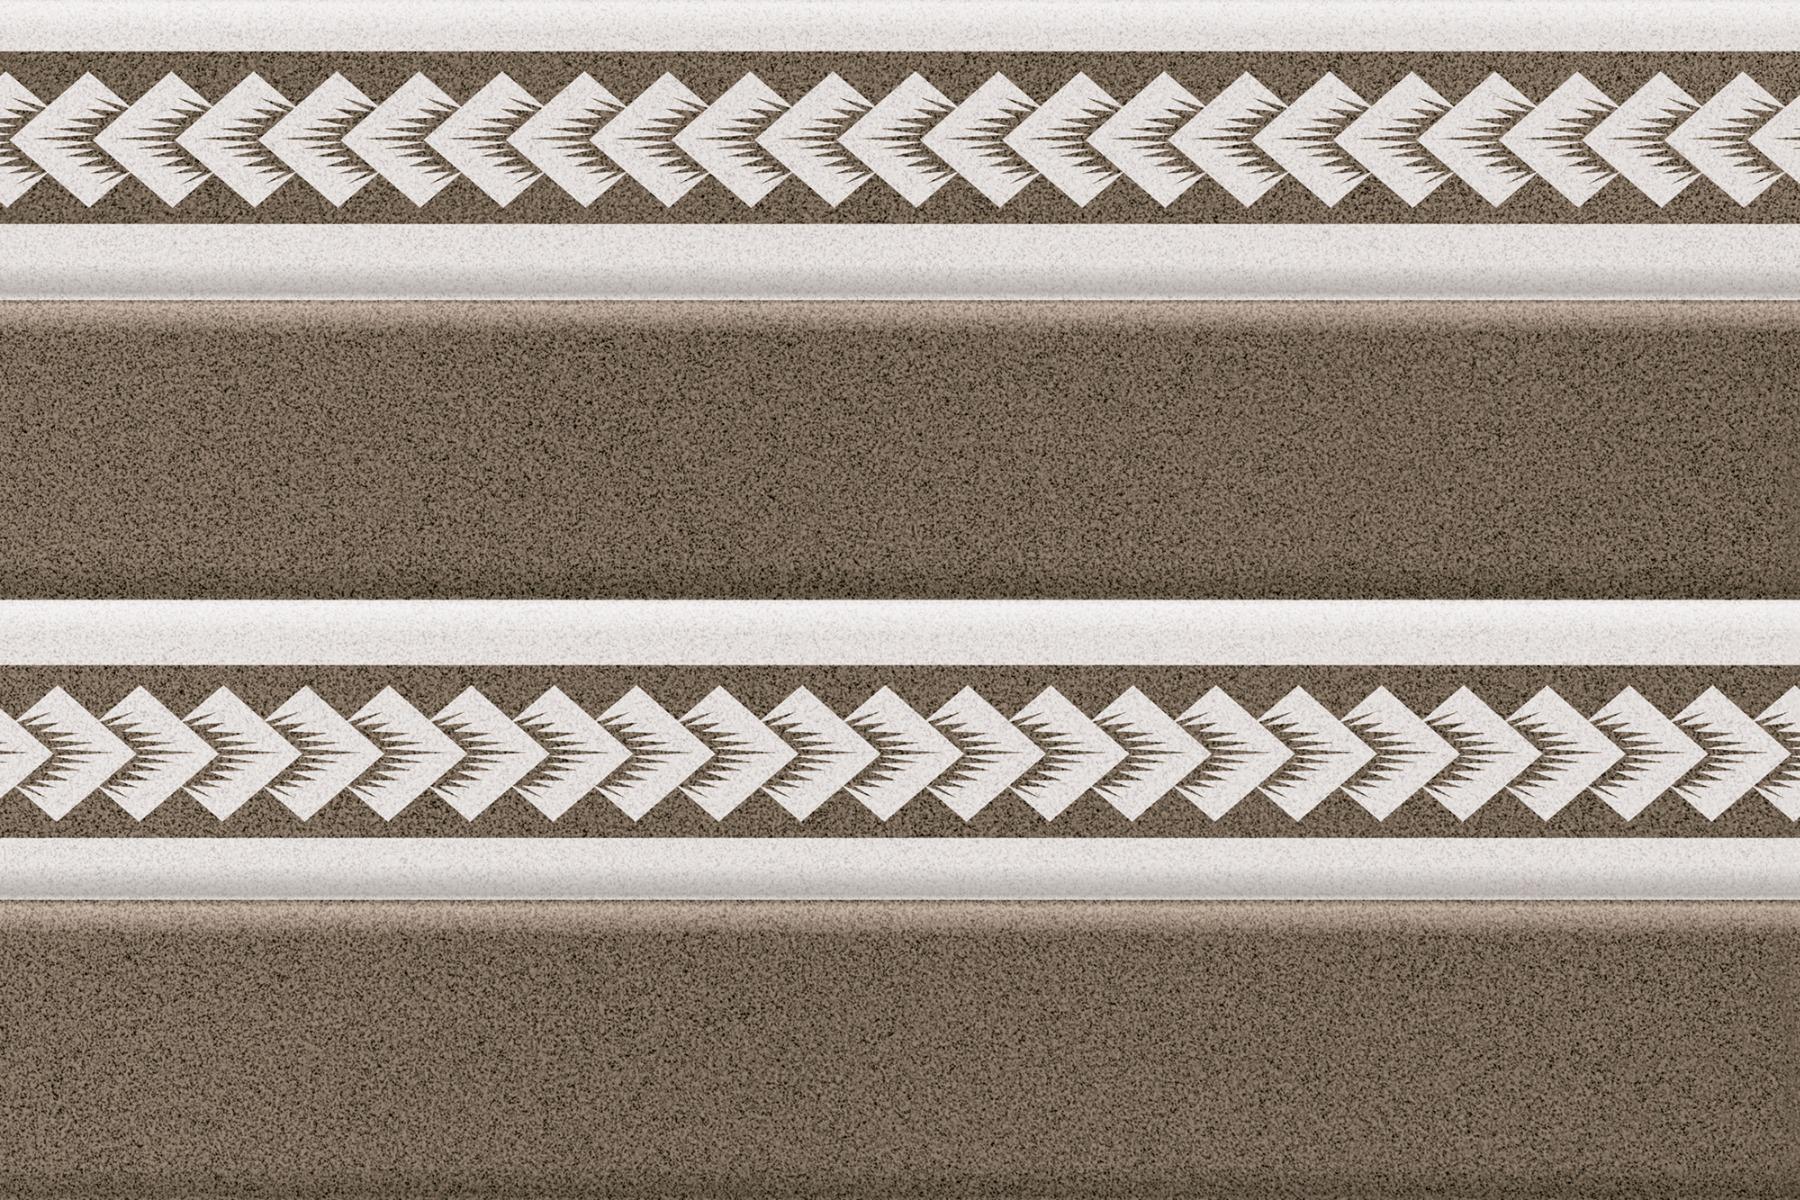 Cream Tiles for Bathroom Tiles, Kitchen Tiles, Balcony Tiles